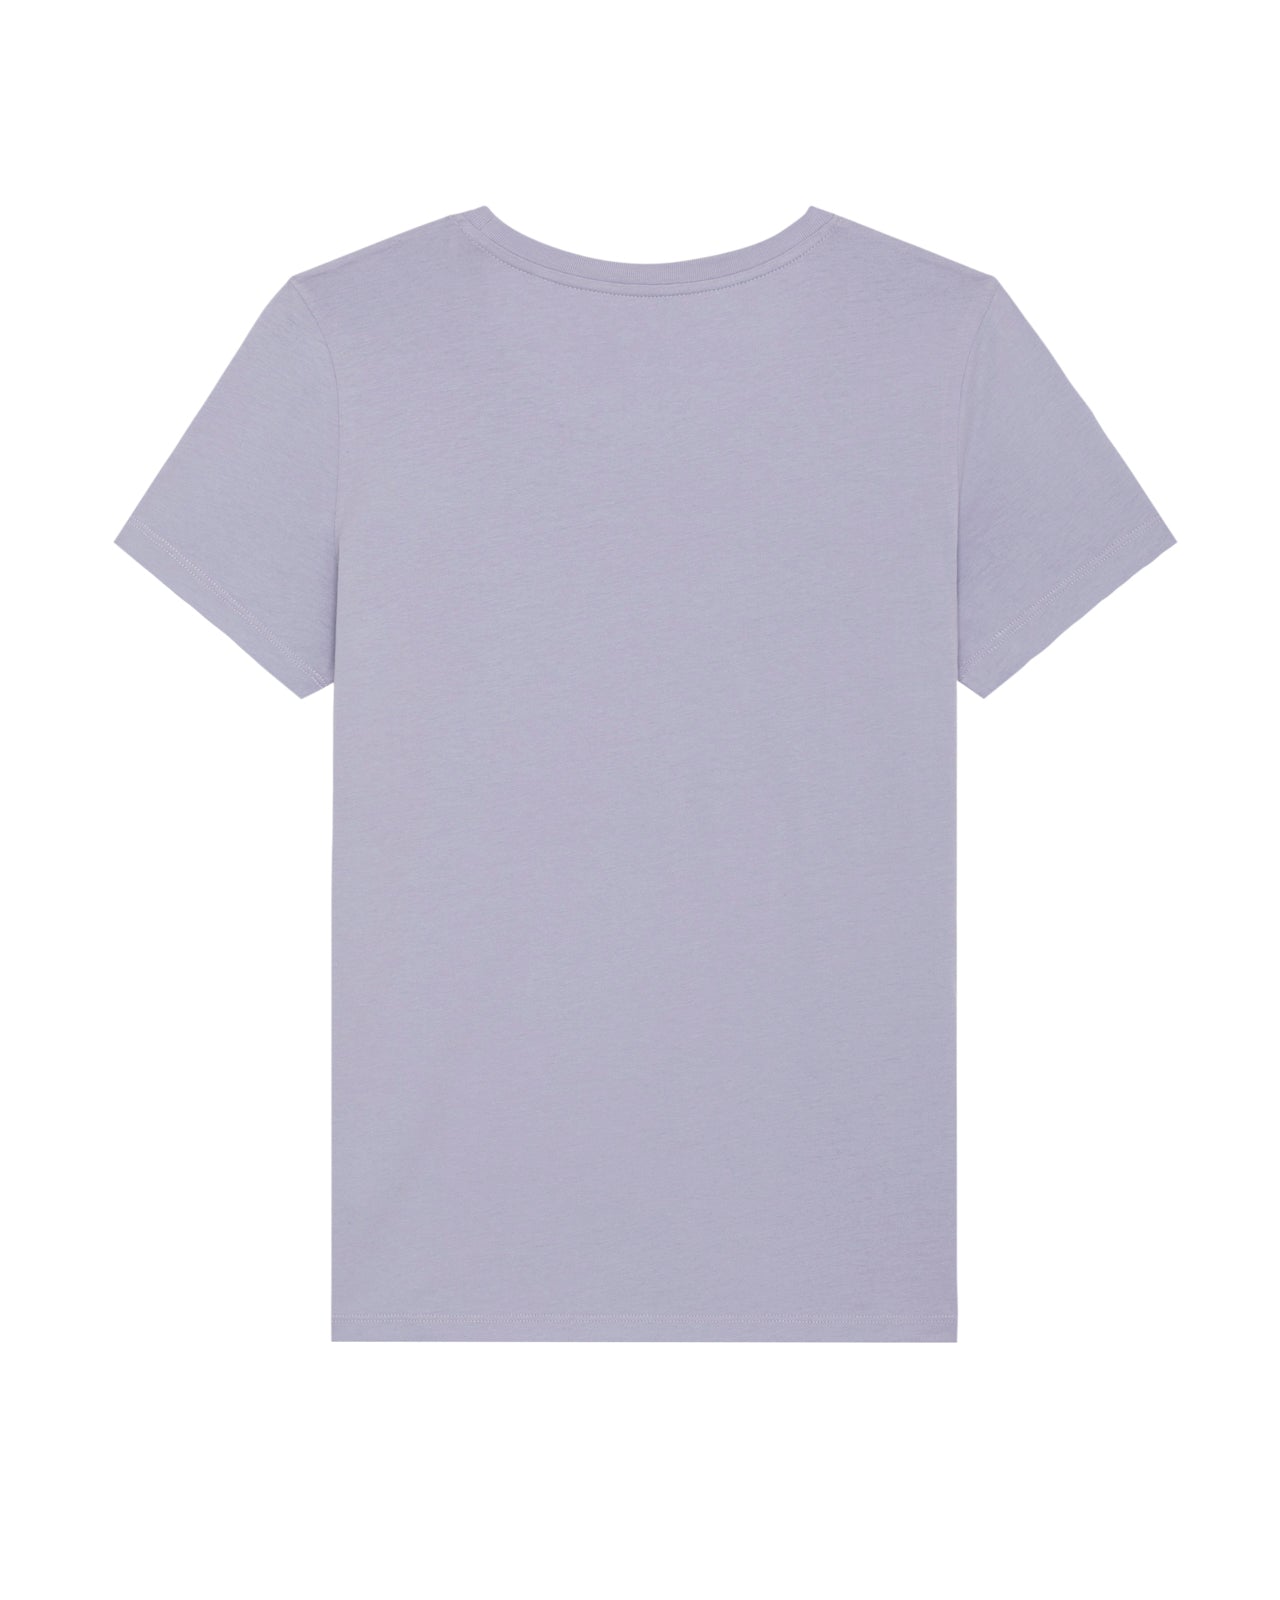 T-Shirt "Moin" Lavendel/Neonorange